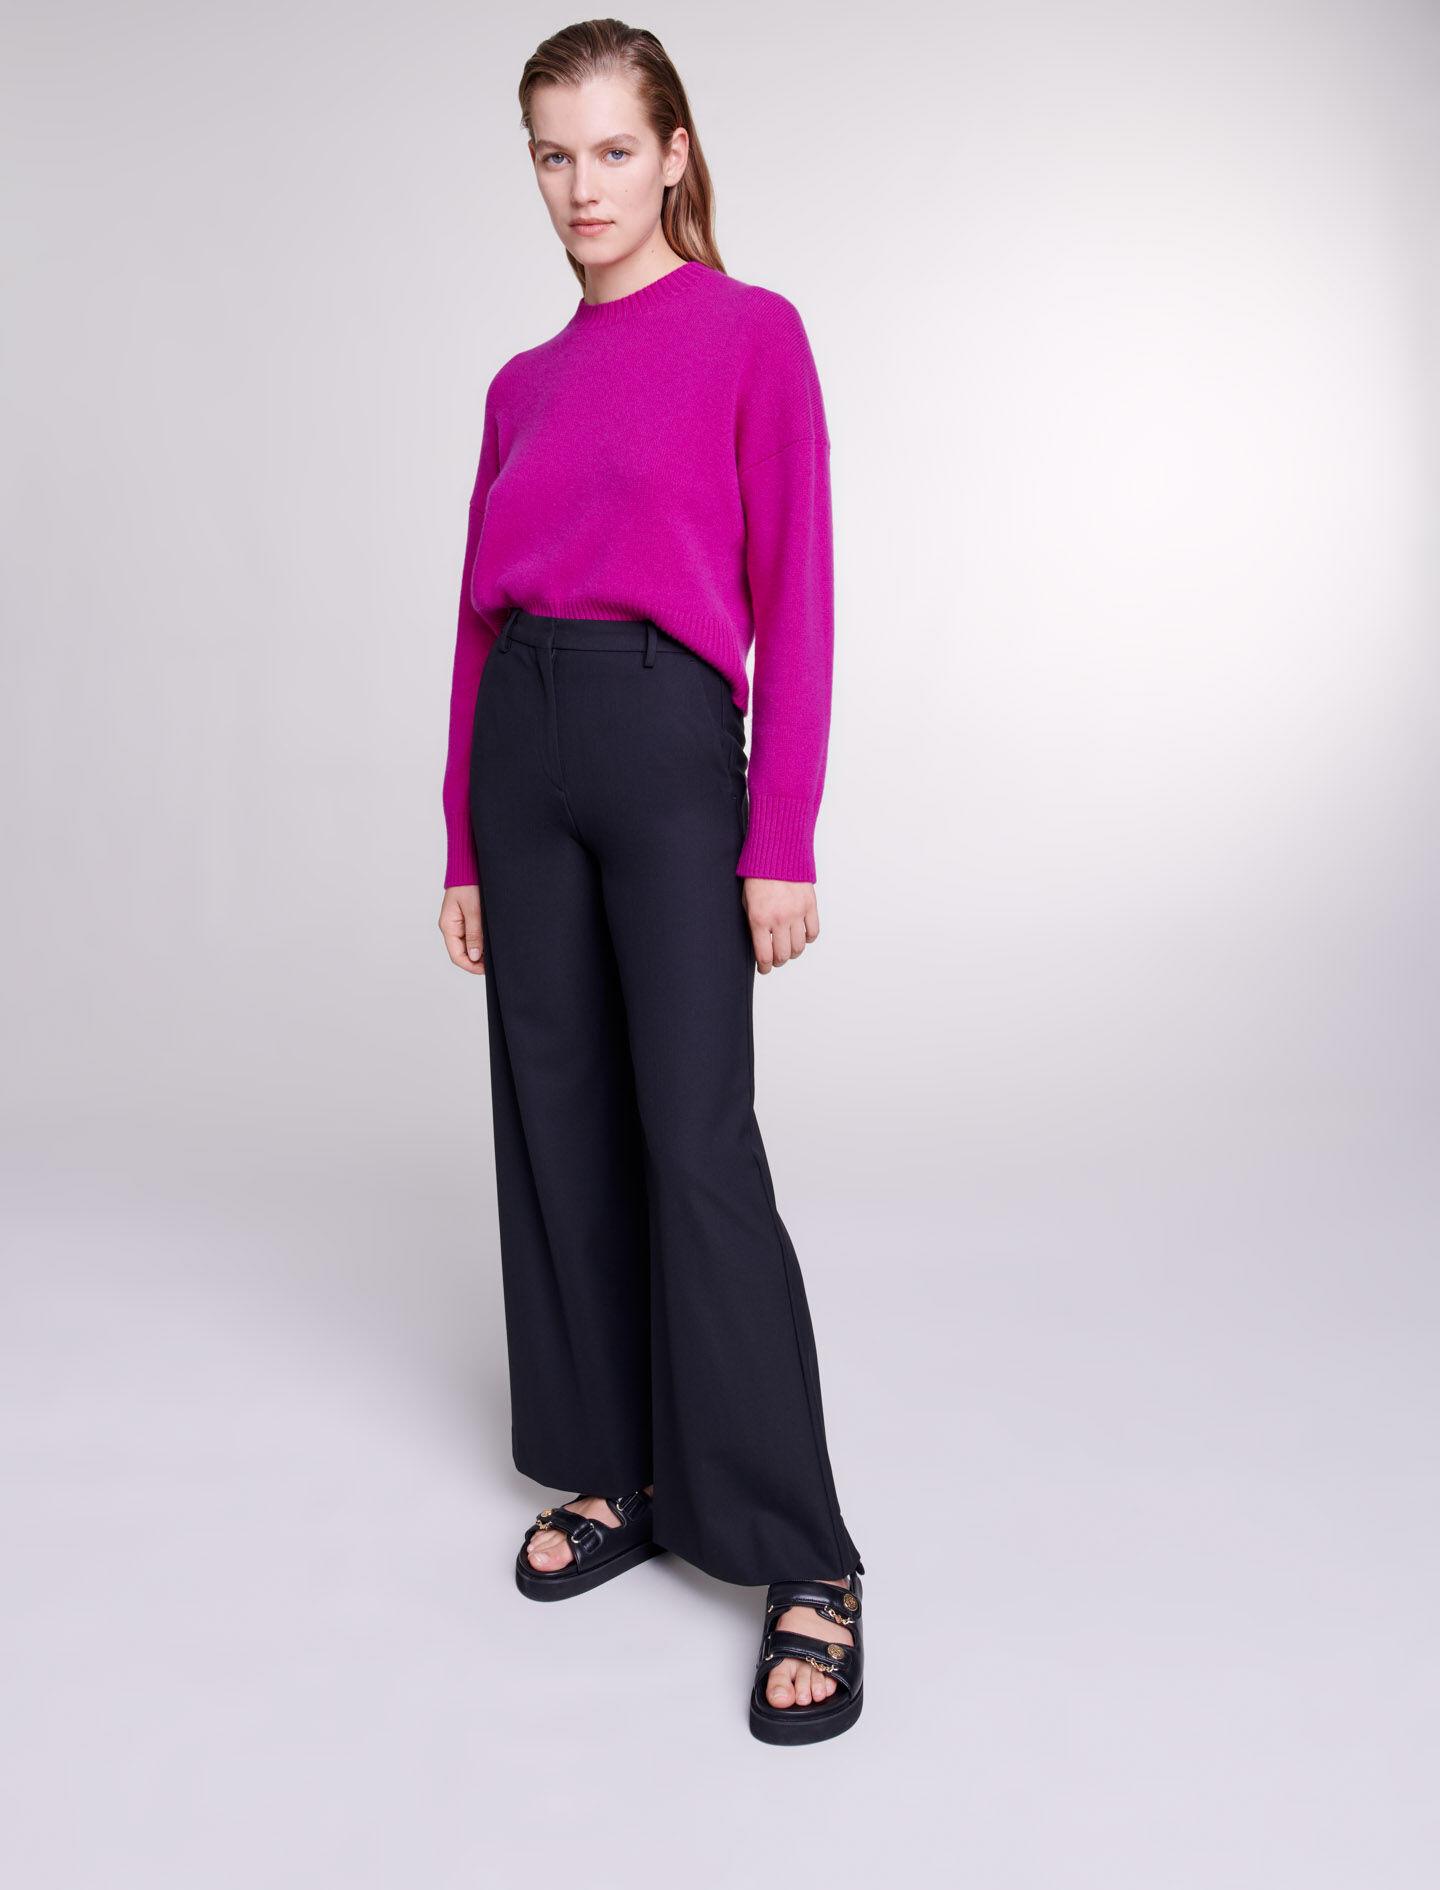 Zara Flared Pants | Flare pants, Zara fashion, Pants for women